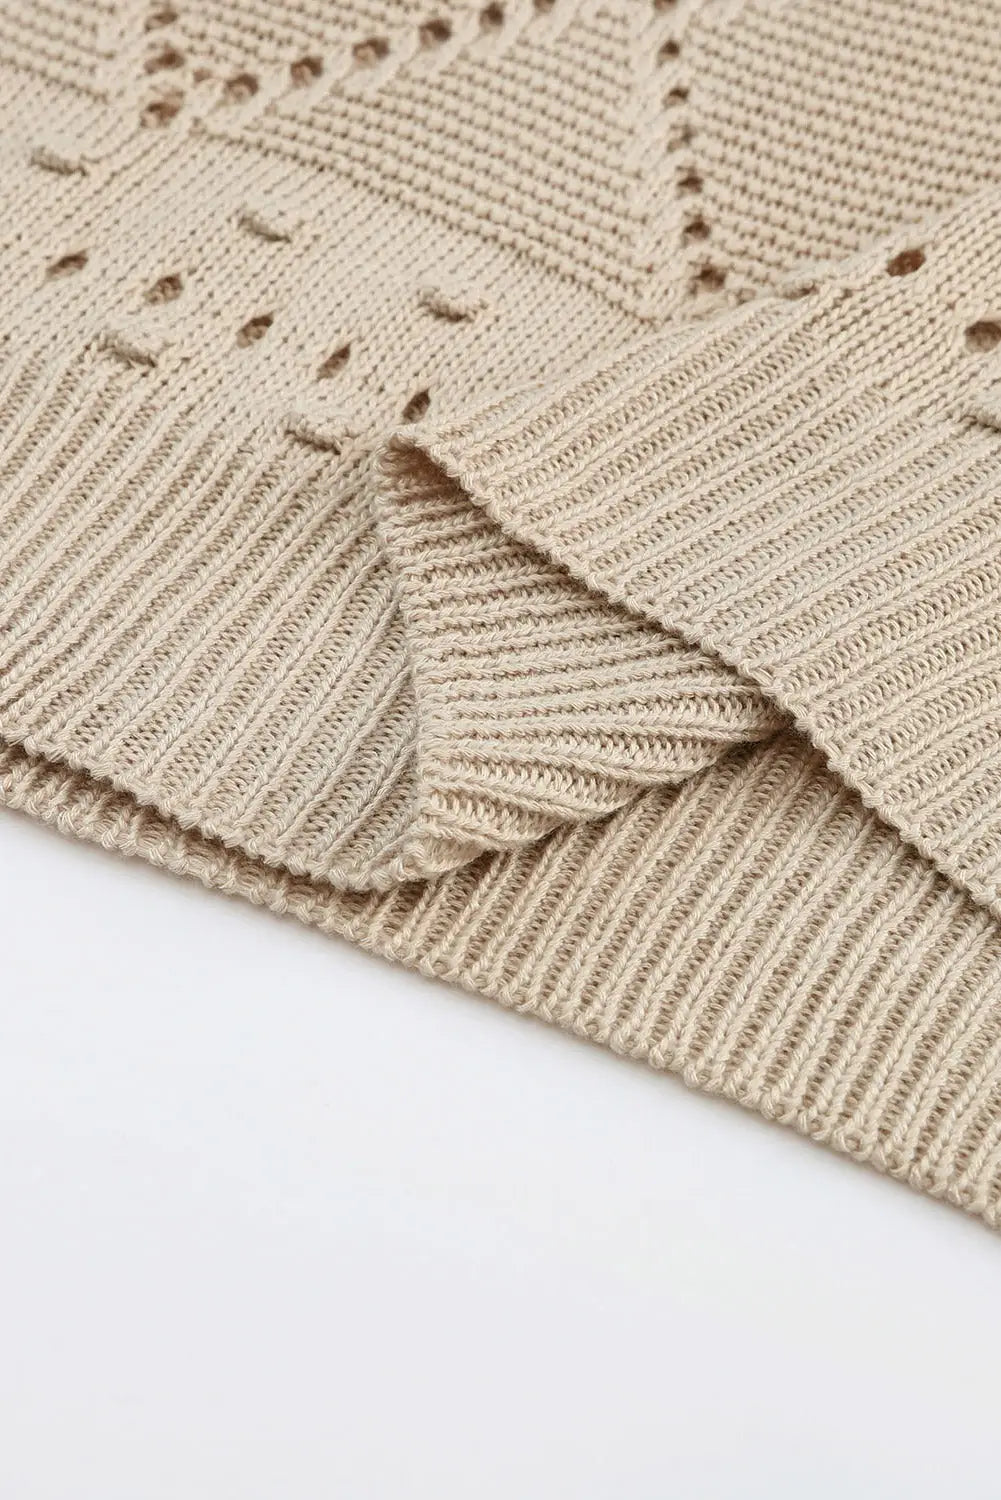 Khaki pointelle knit short dolman sleeve sweater top - t-shirts